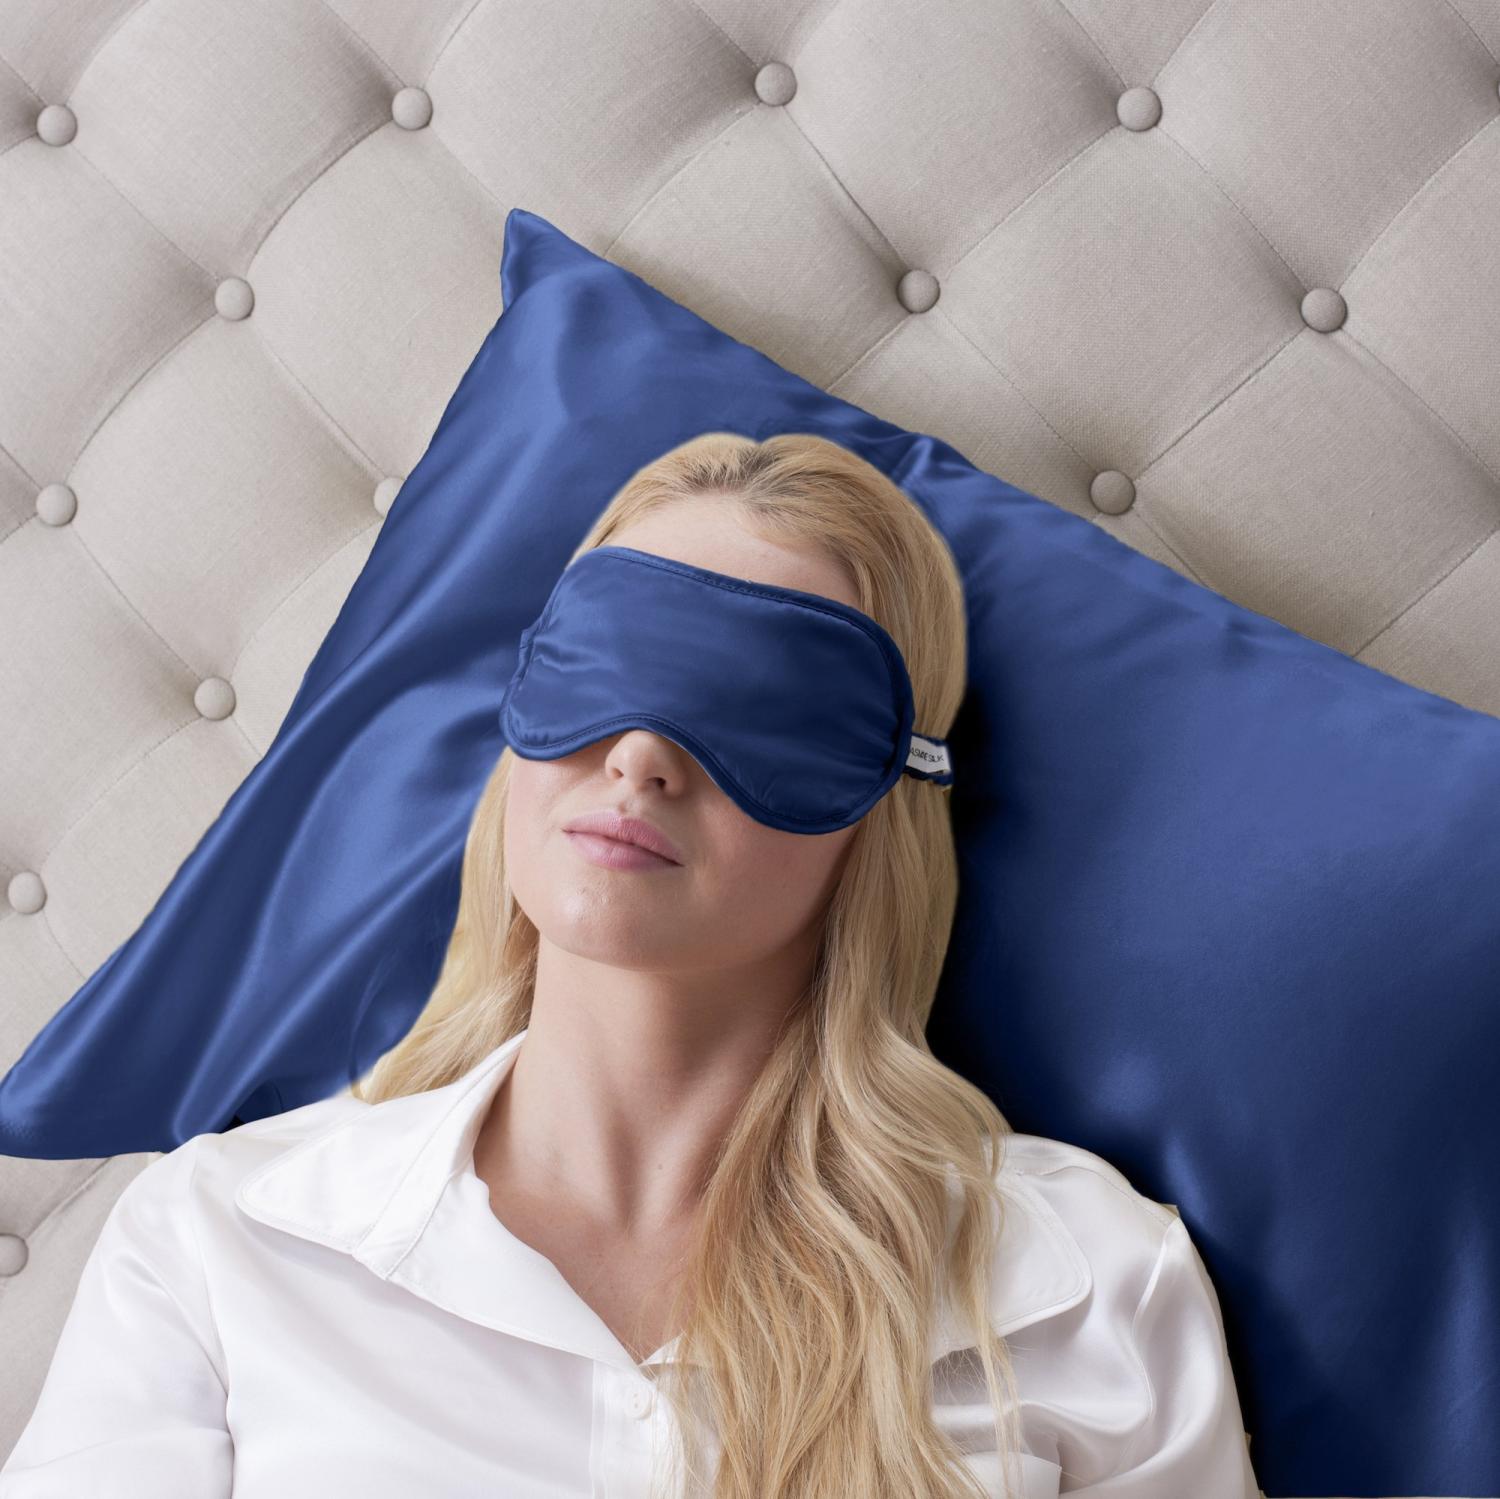 Pure Silk Charmeuse Sleep Mask, 100% Silk Eyemasks